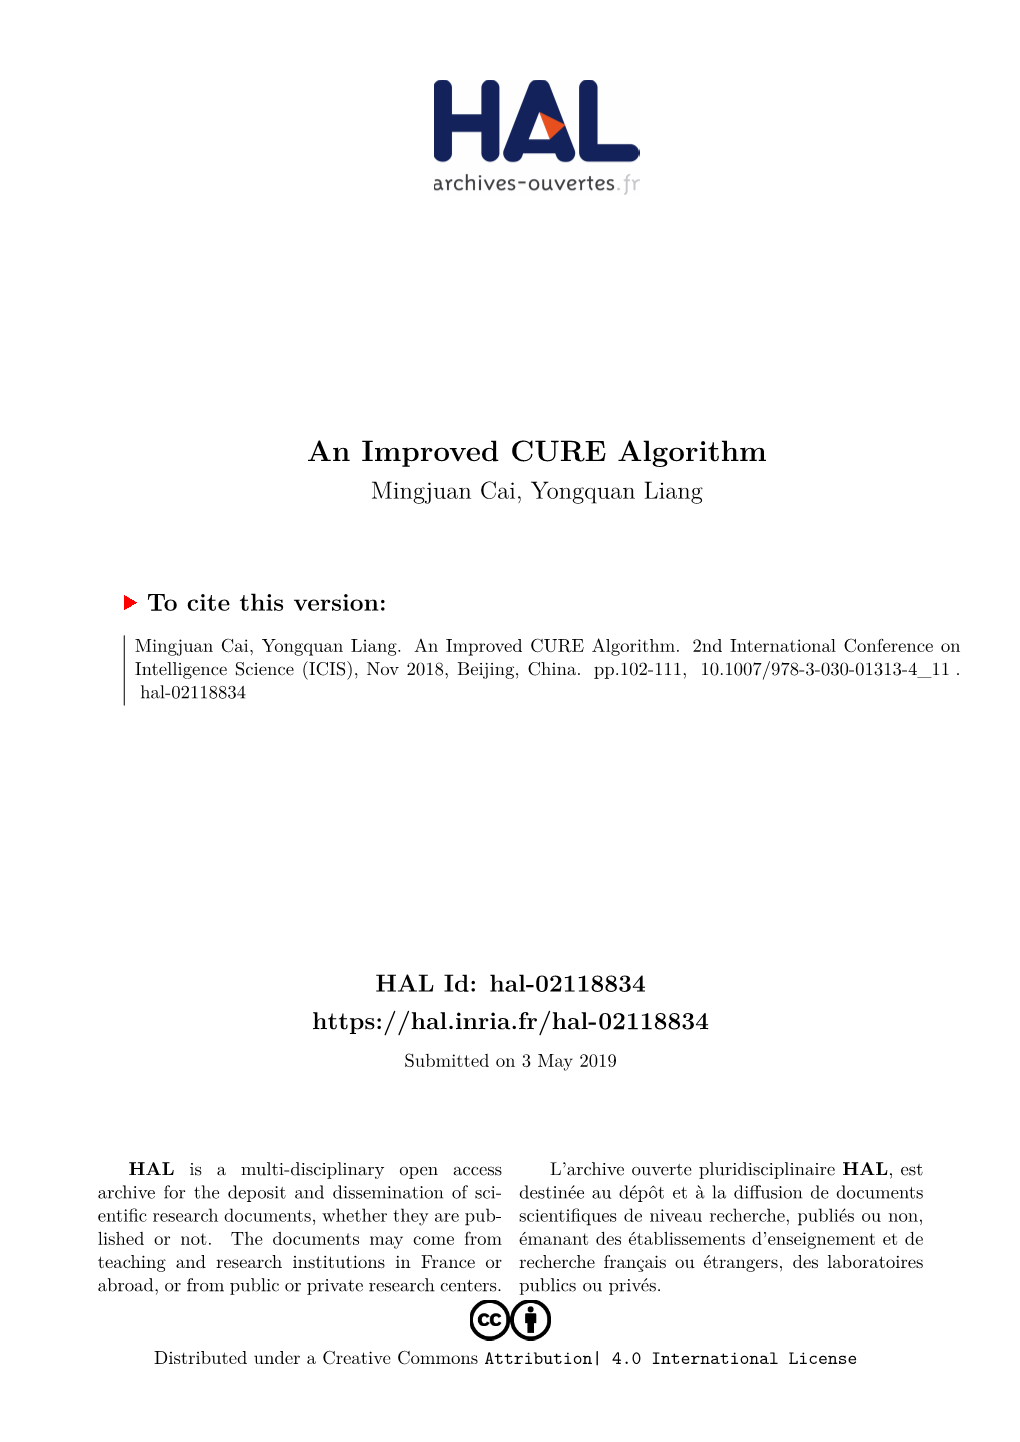 An Improved CURE Algorithm Mingjuan Cai, Yongquan Liang